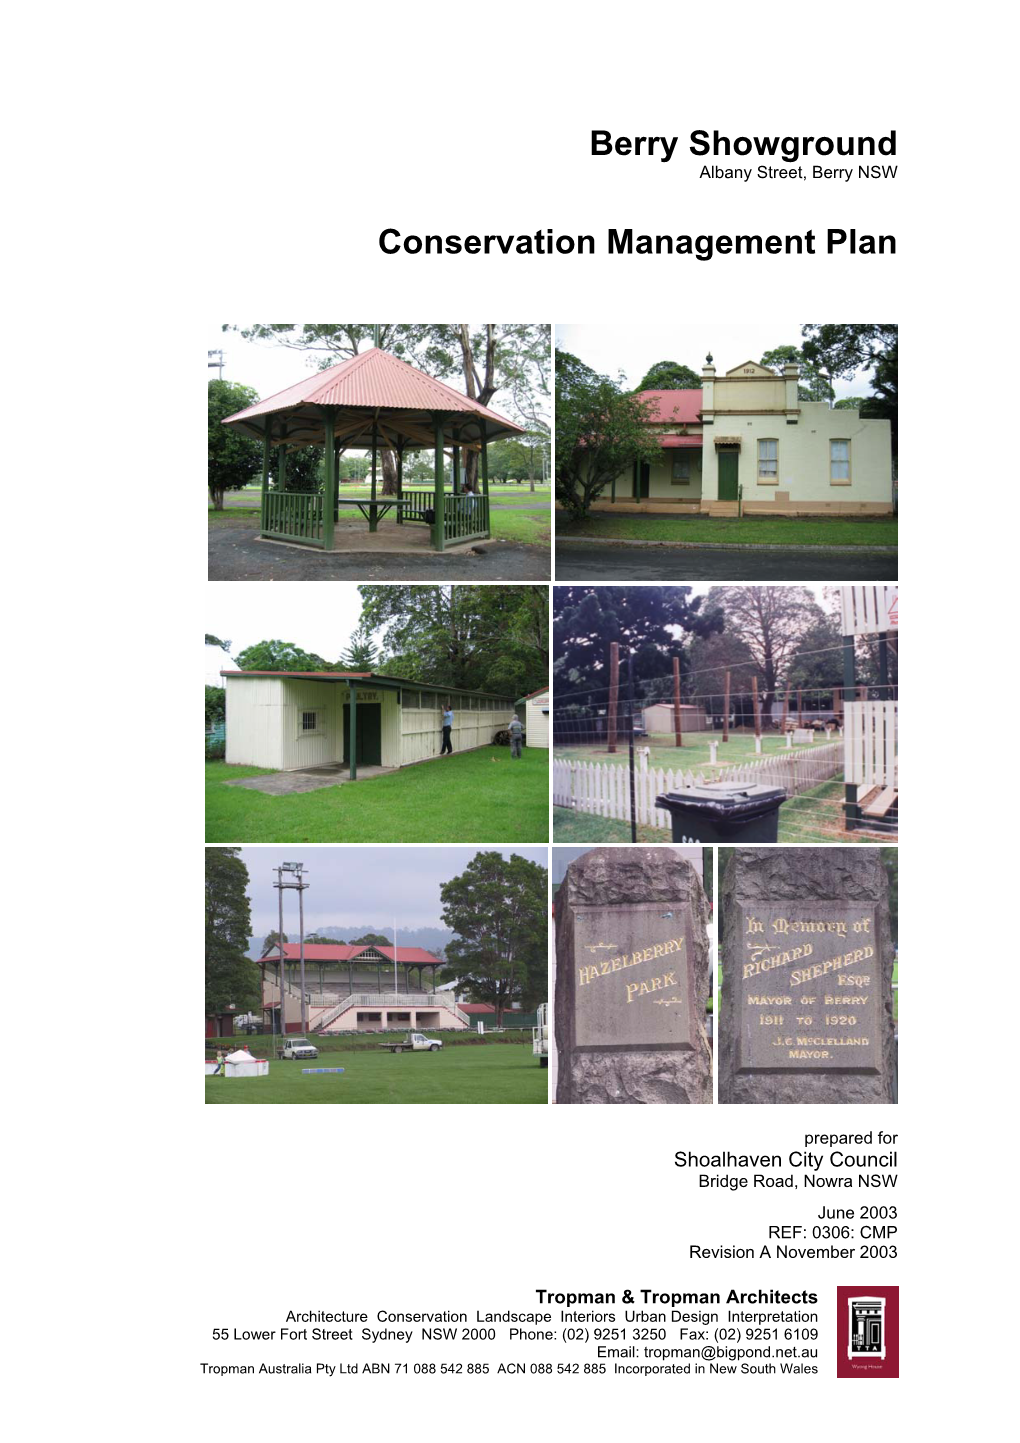 Berry Showground Conservation Management Plan